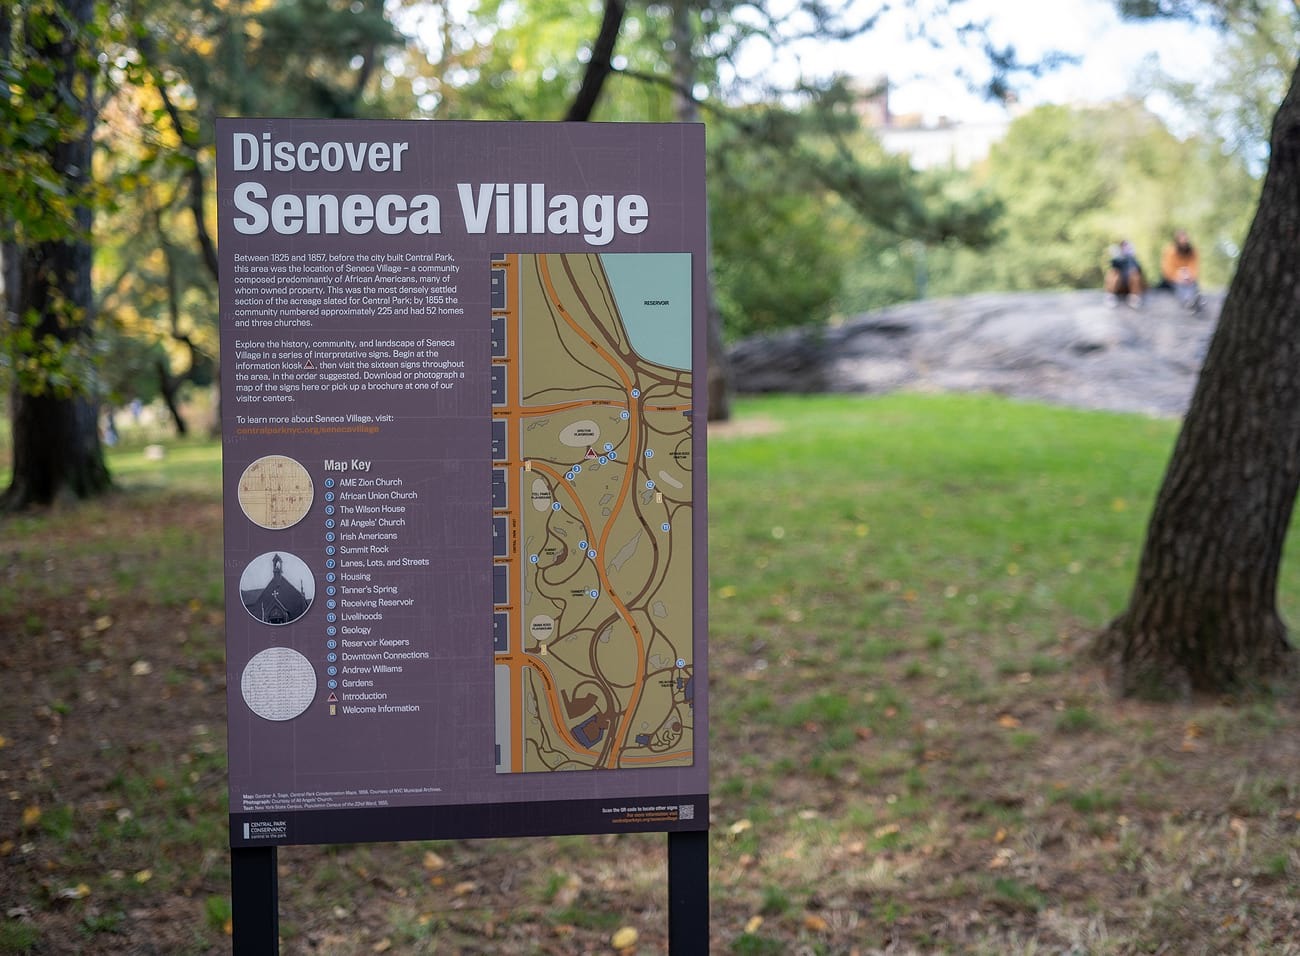 Seneca Village exhibit sign (Image: Courtesy Central Park Conservancy)